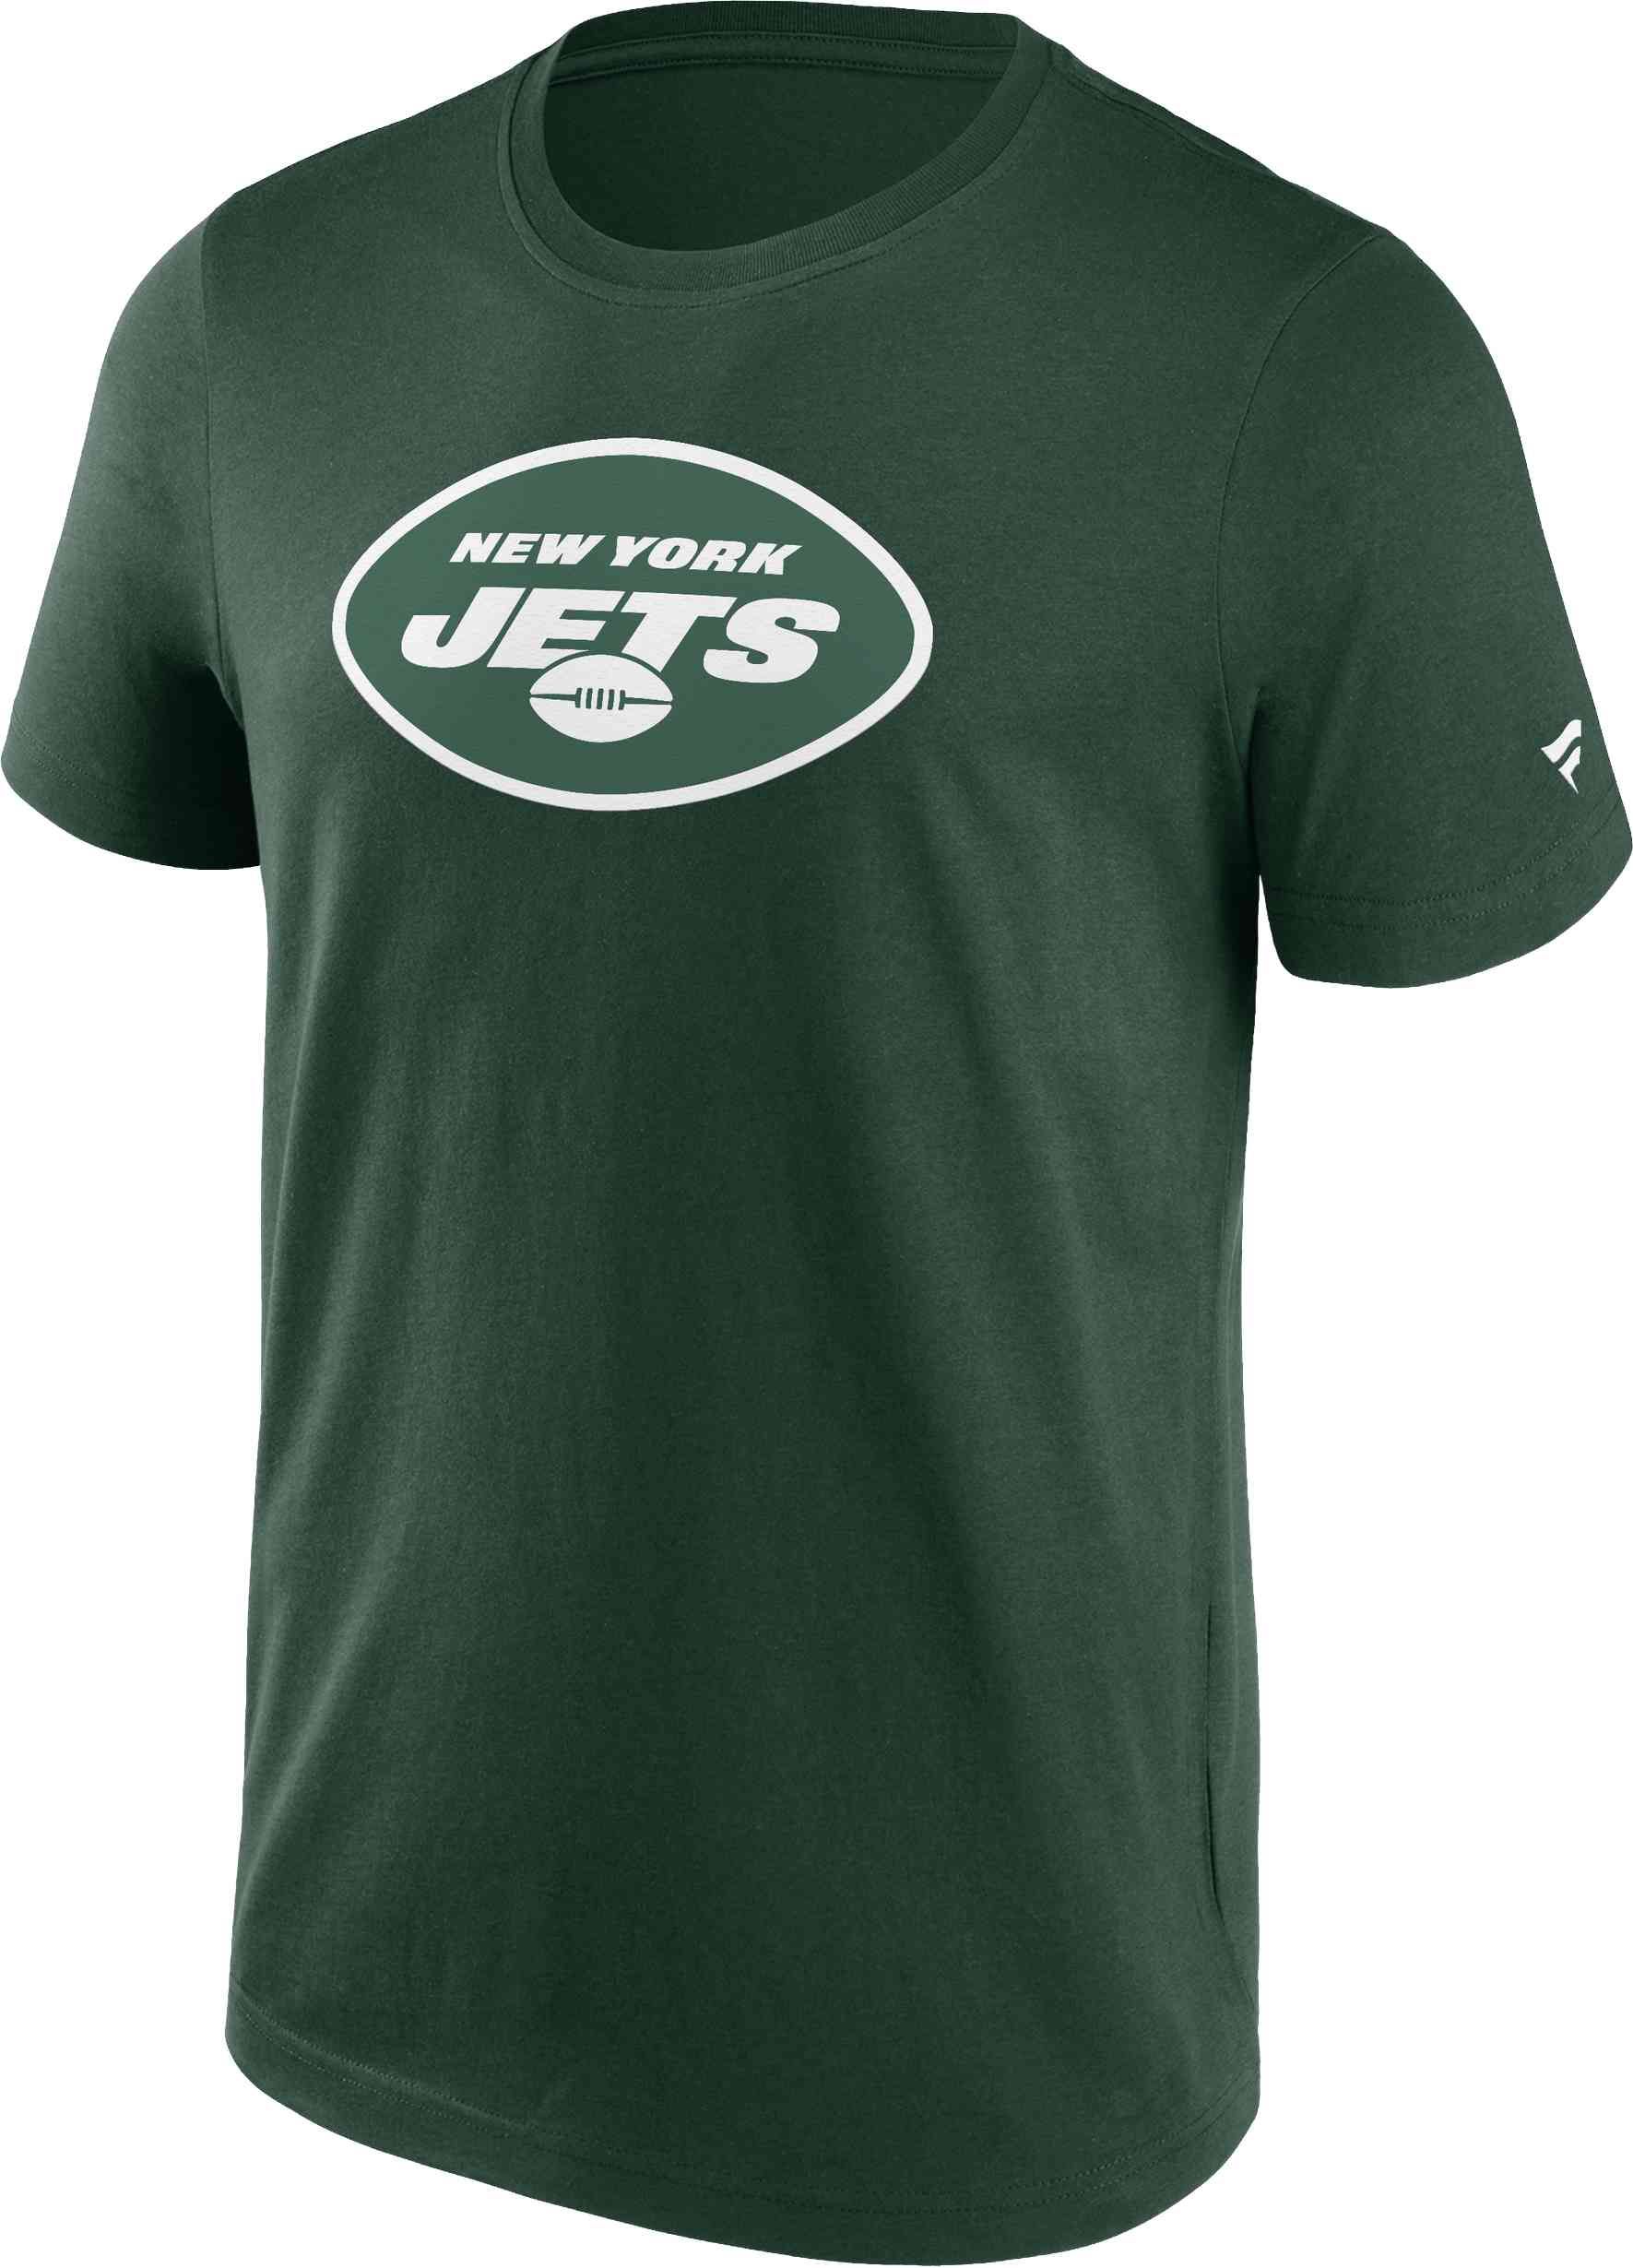 Fanatics - NFL New York Jets Primary Logo Graphic T-Shirt